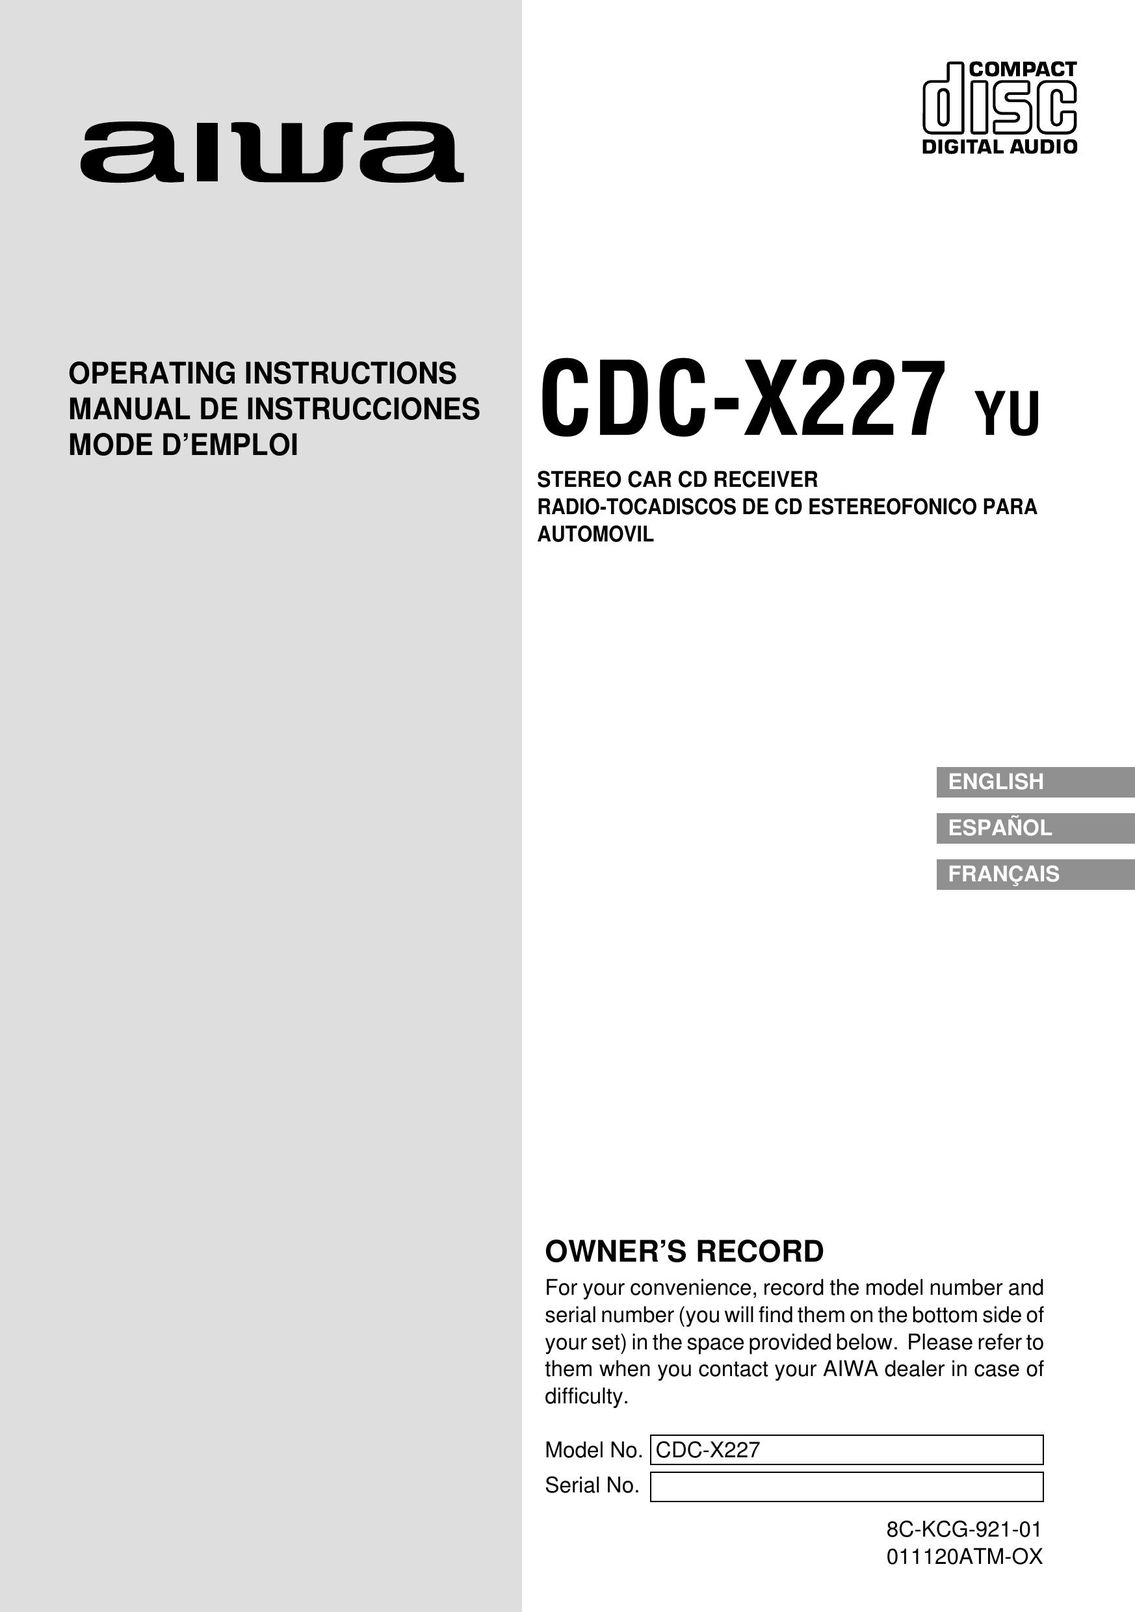 Aiwa CDC-X227 Car Stereo System User Manual